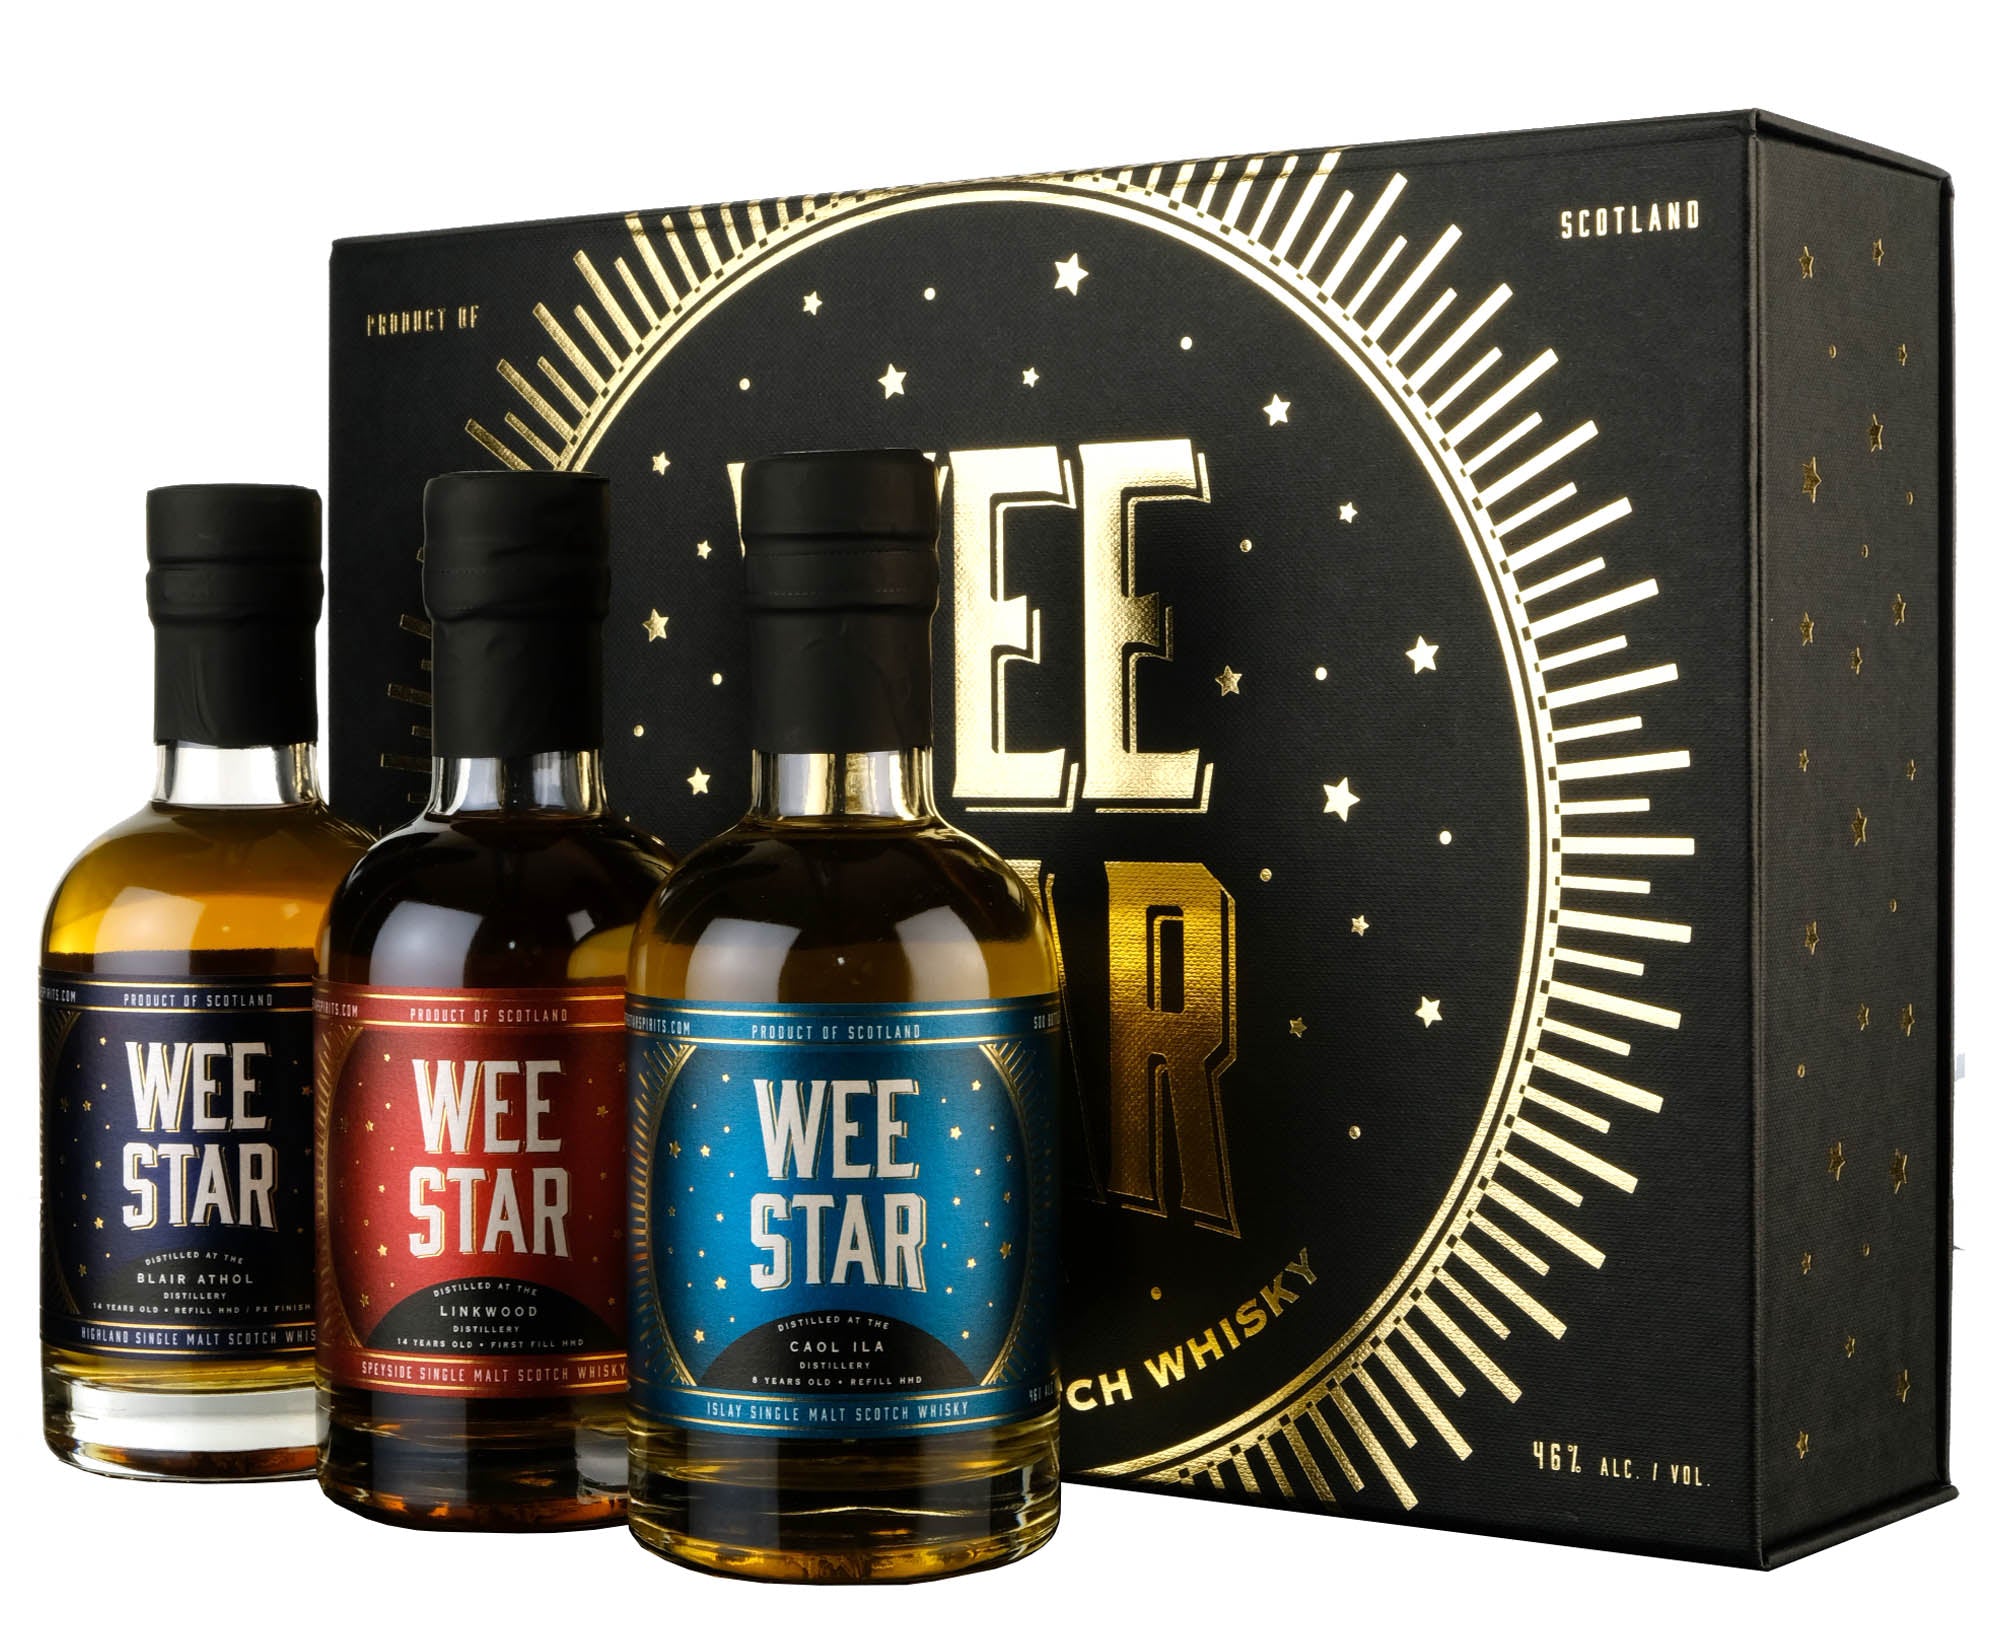 North Star Wee Star | 3x20cl Tasting Pack